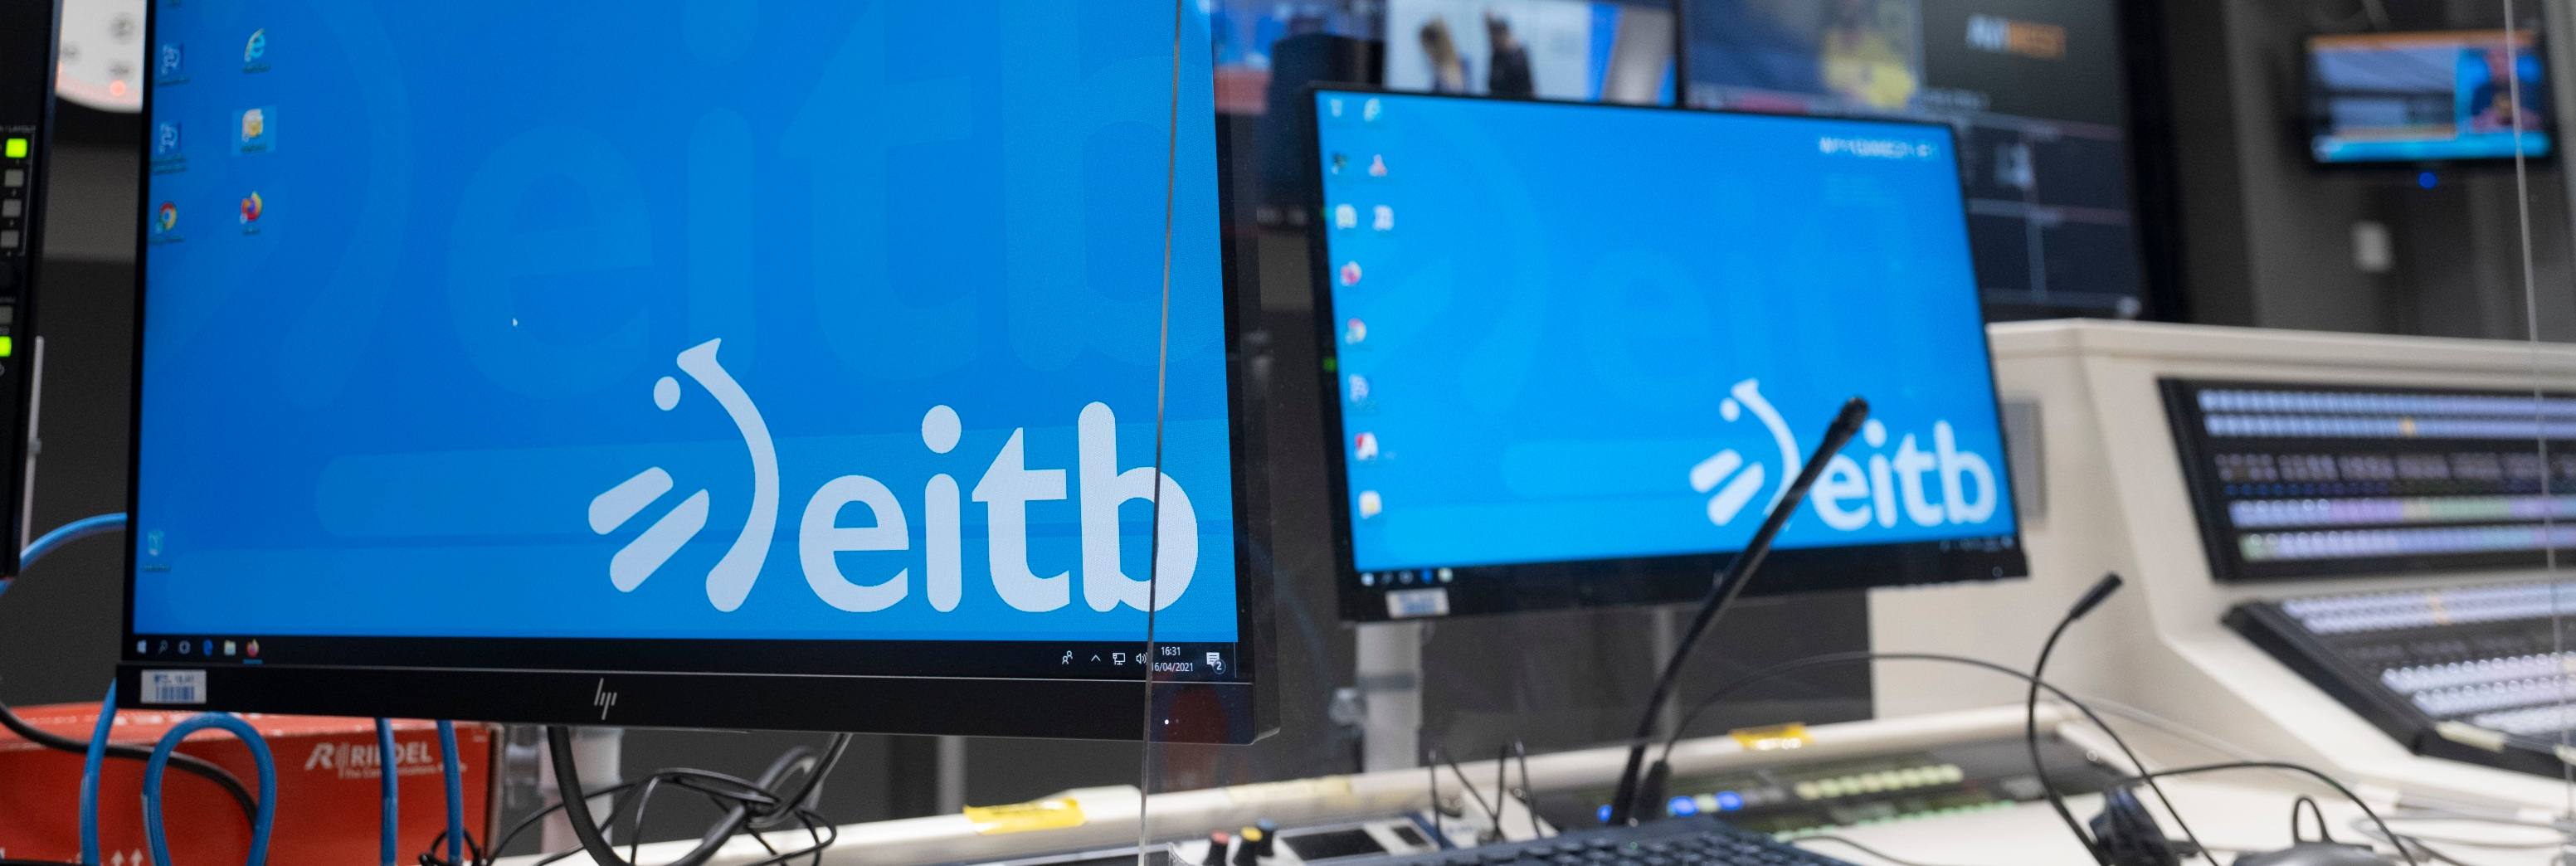 Dos ordenadores con el logotipo de EITB como fondo de pantalla